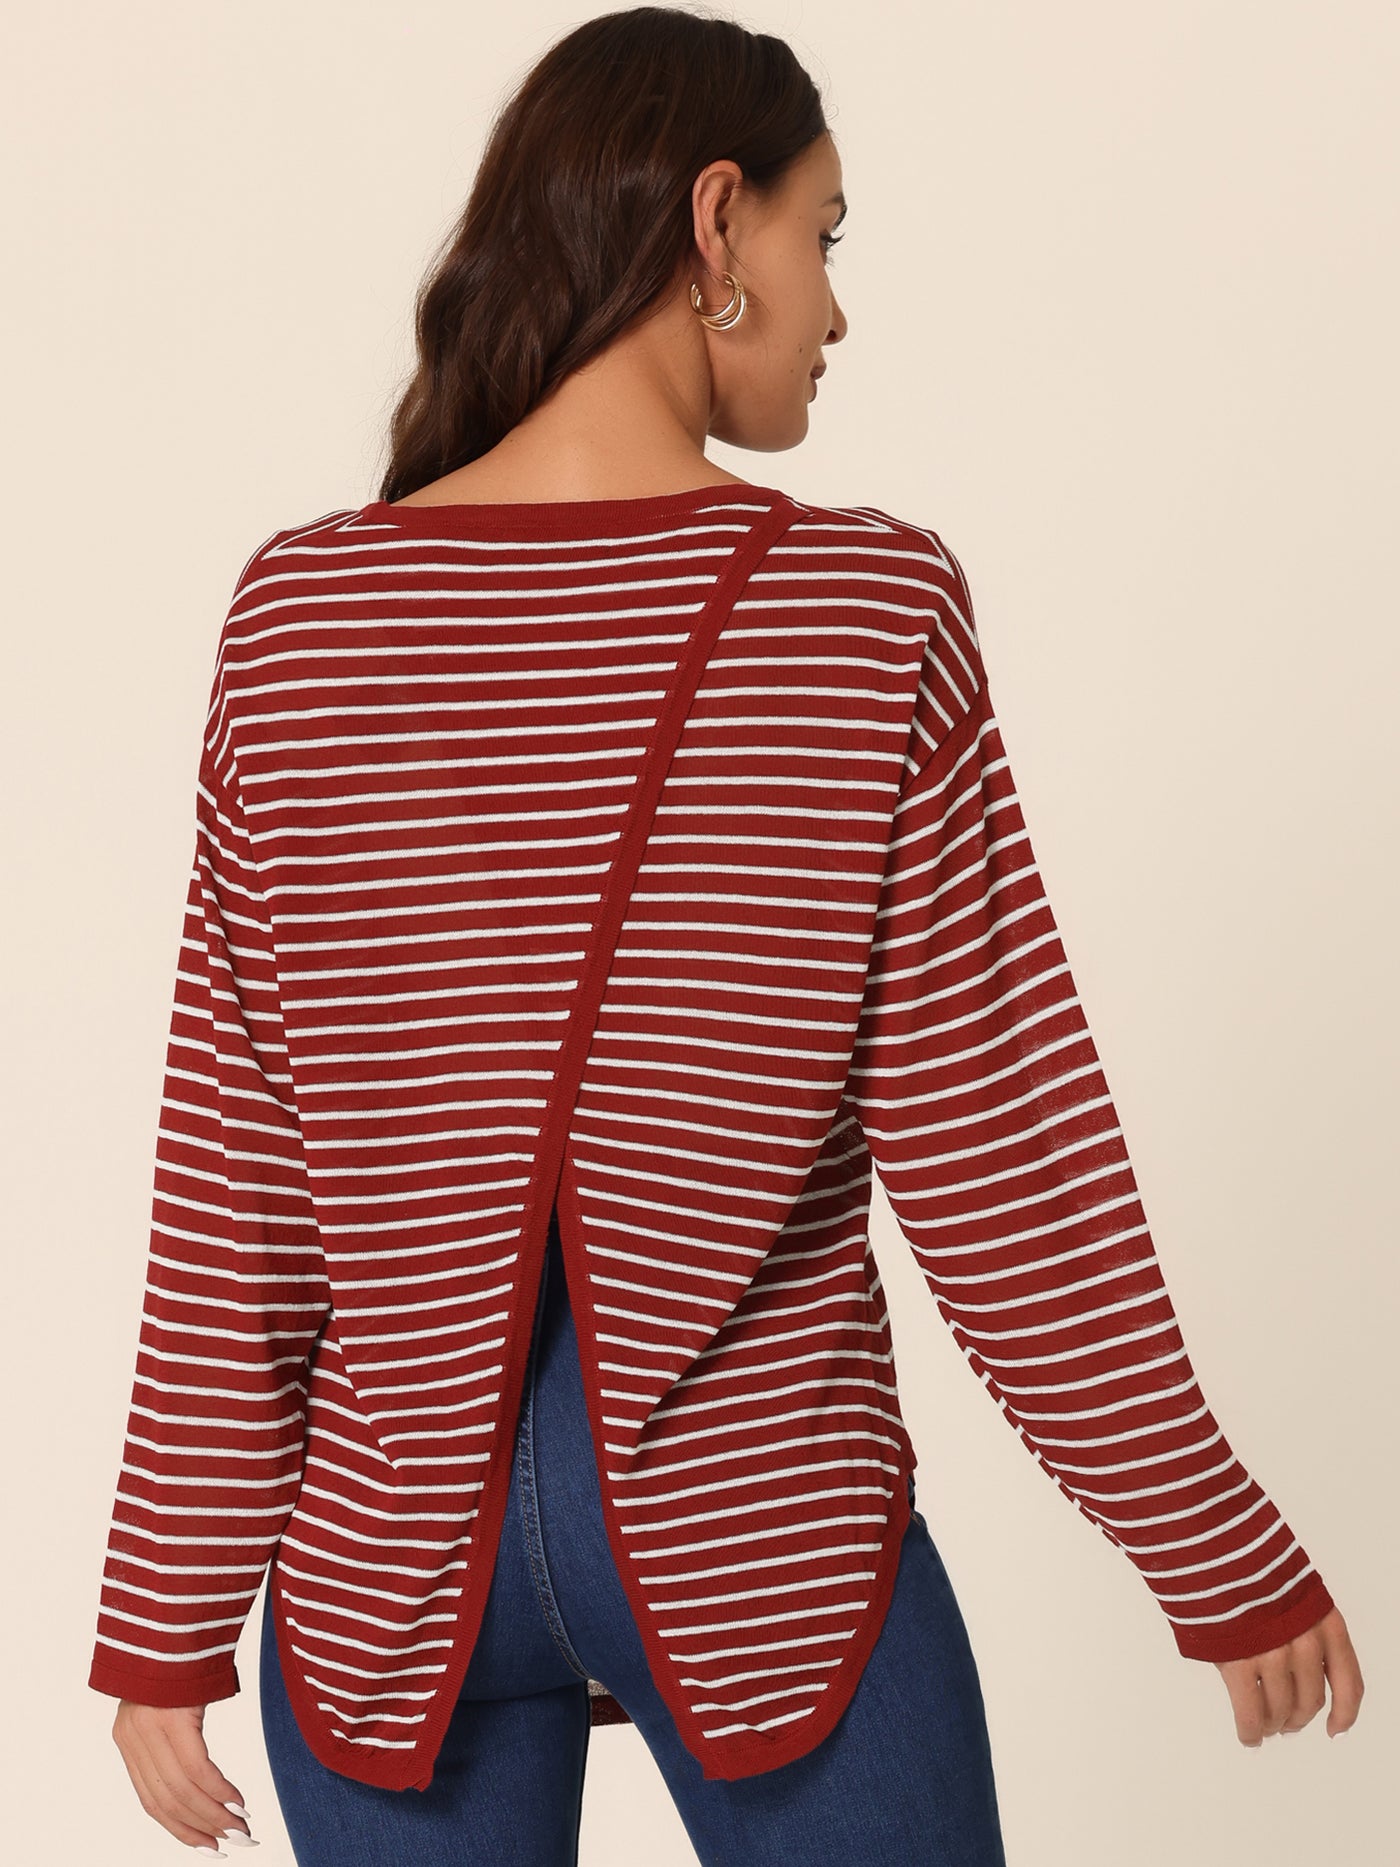 Bublédon Women's Long Sleeve Back Split Striped Knit Pullover Sweater Curved Hem Fashion Jumper Tops